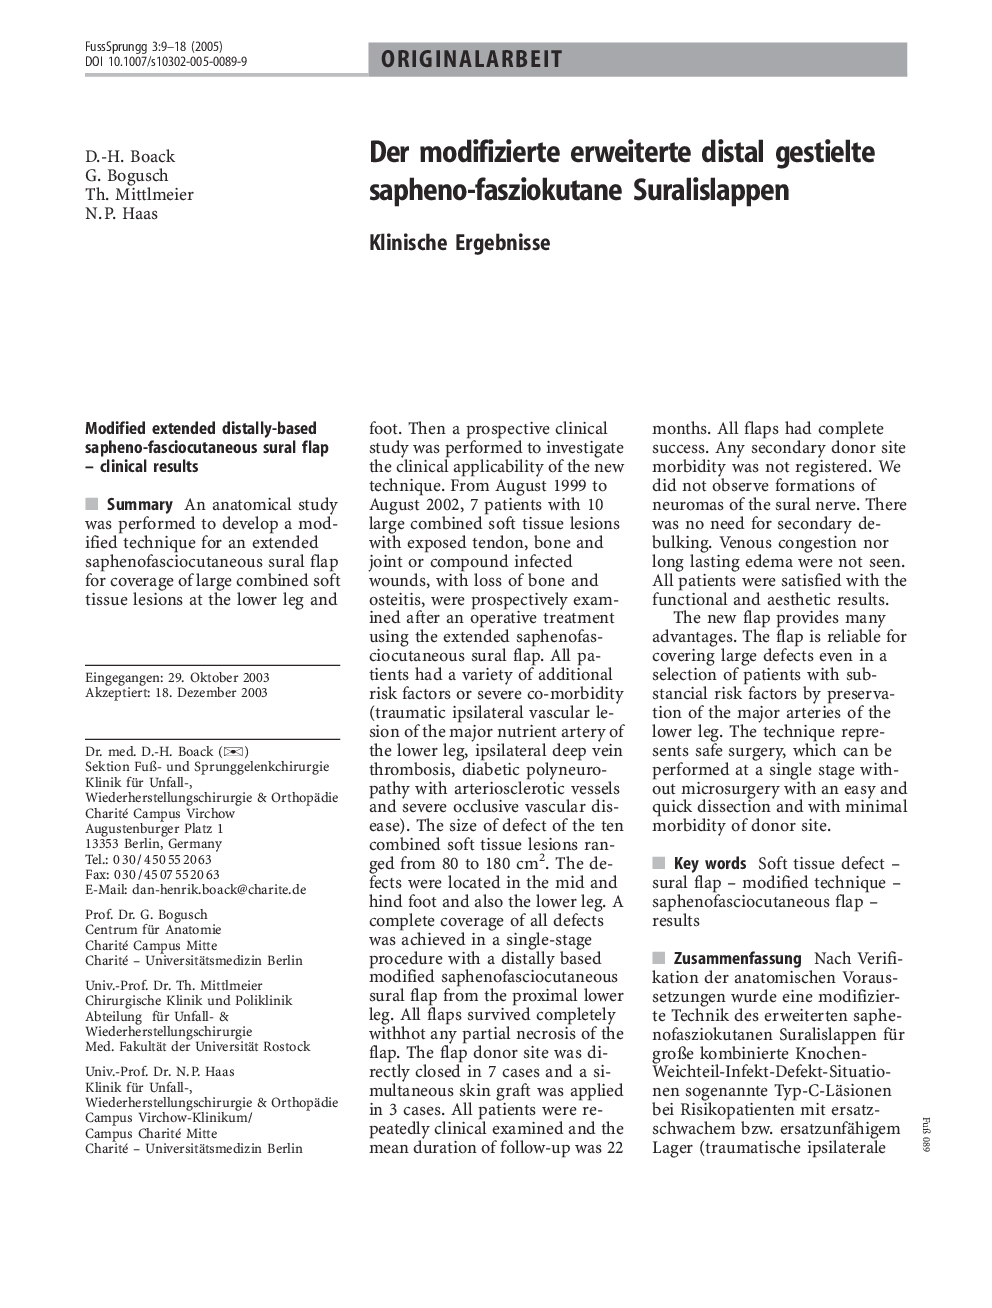 Der modifizierte erweiterte distal gestielte sapheno-fasziokutane Suralislappen